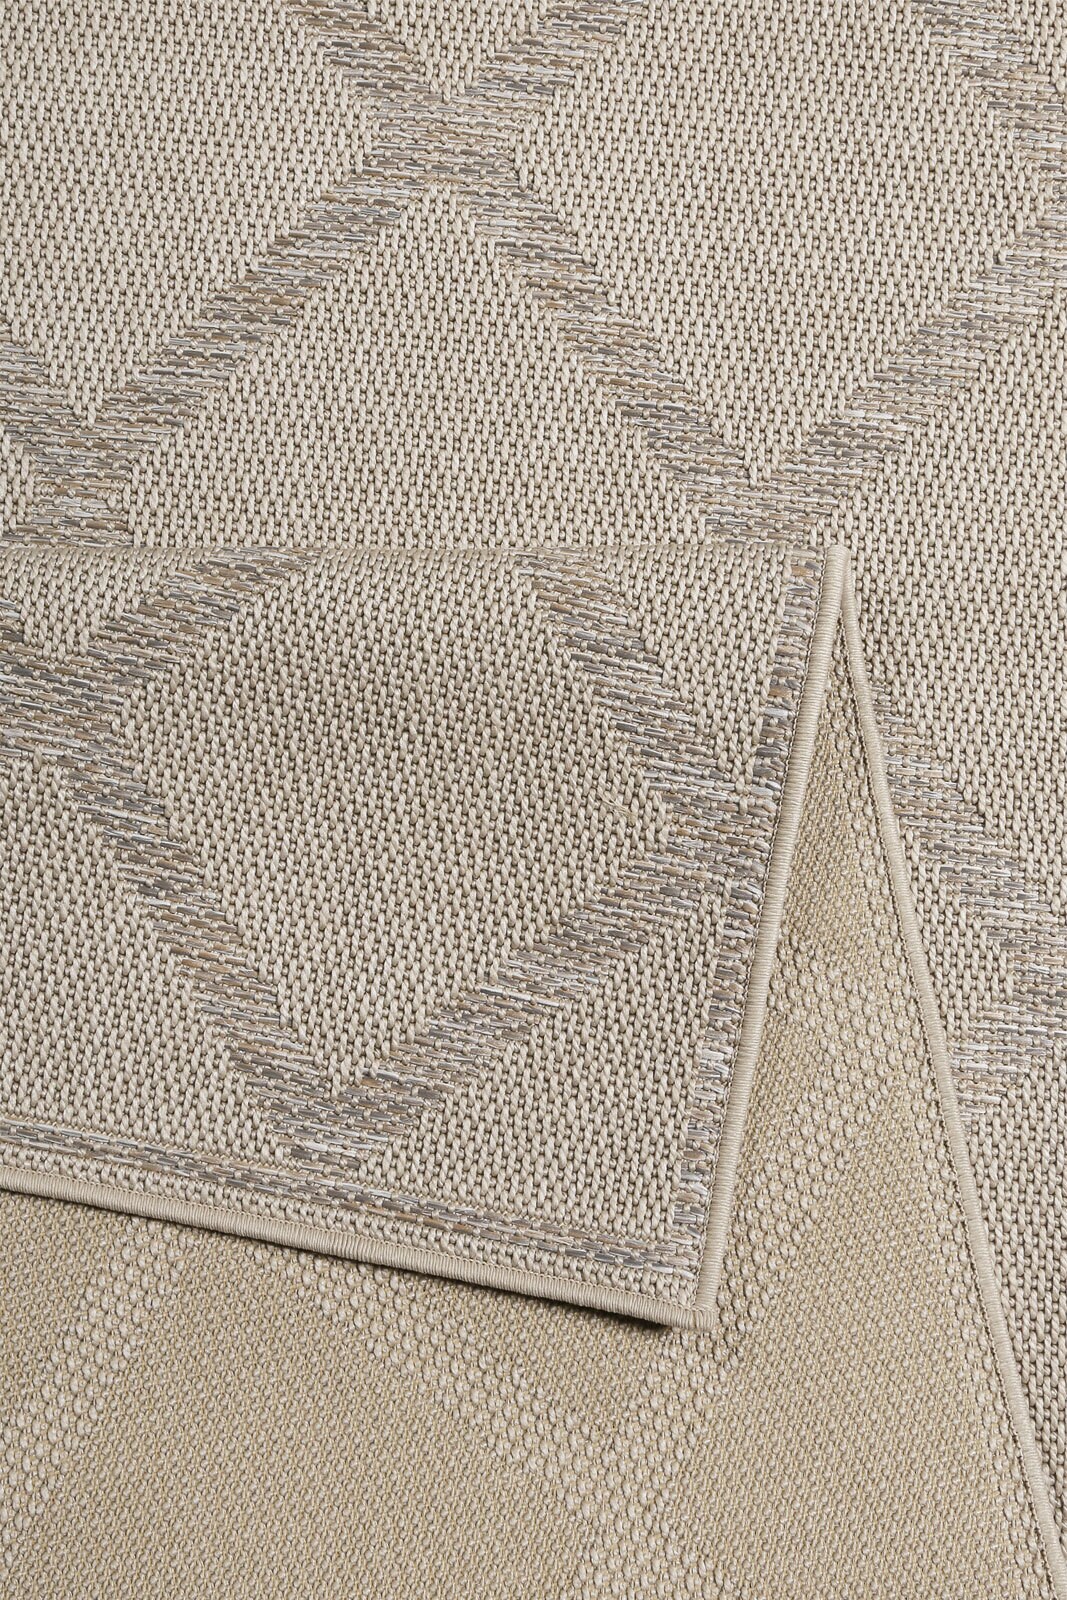 ESPRIT Outdoorteppich RHOMB 133 x 200 cm beige/grau